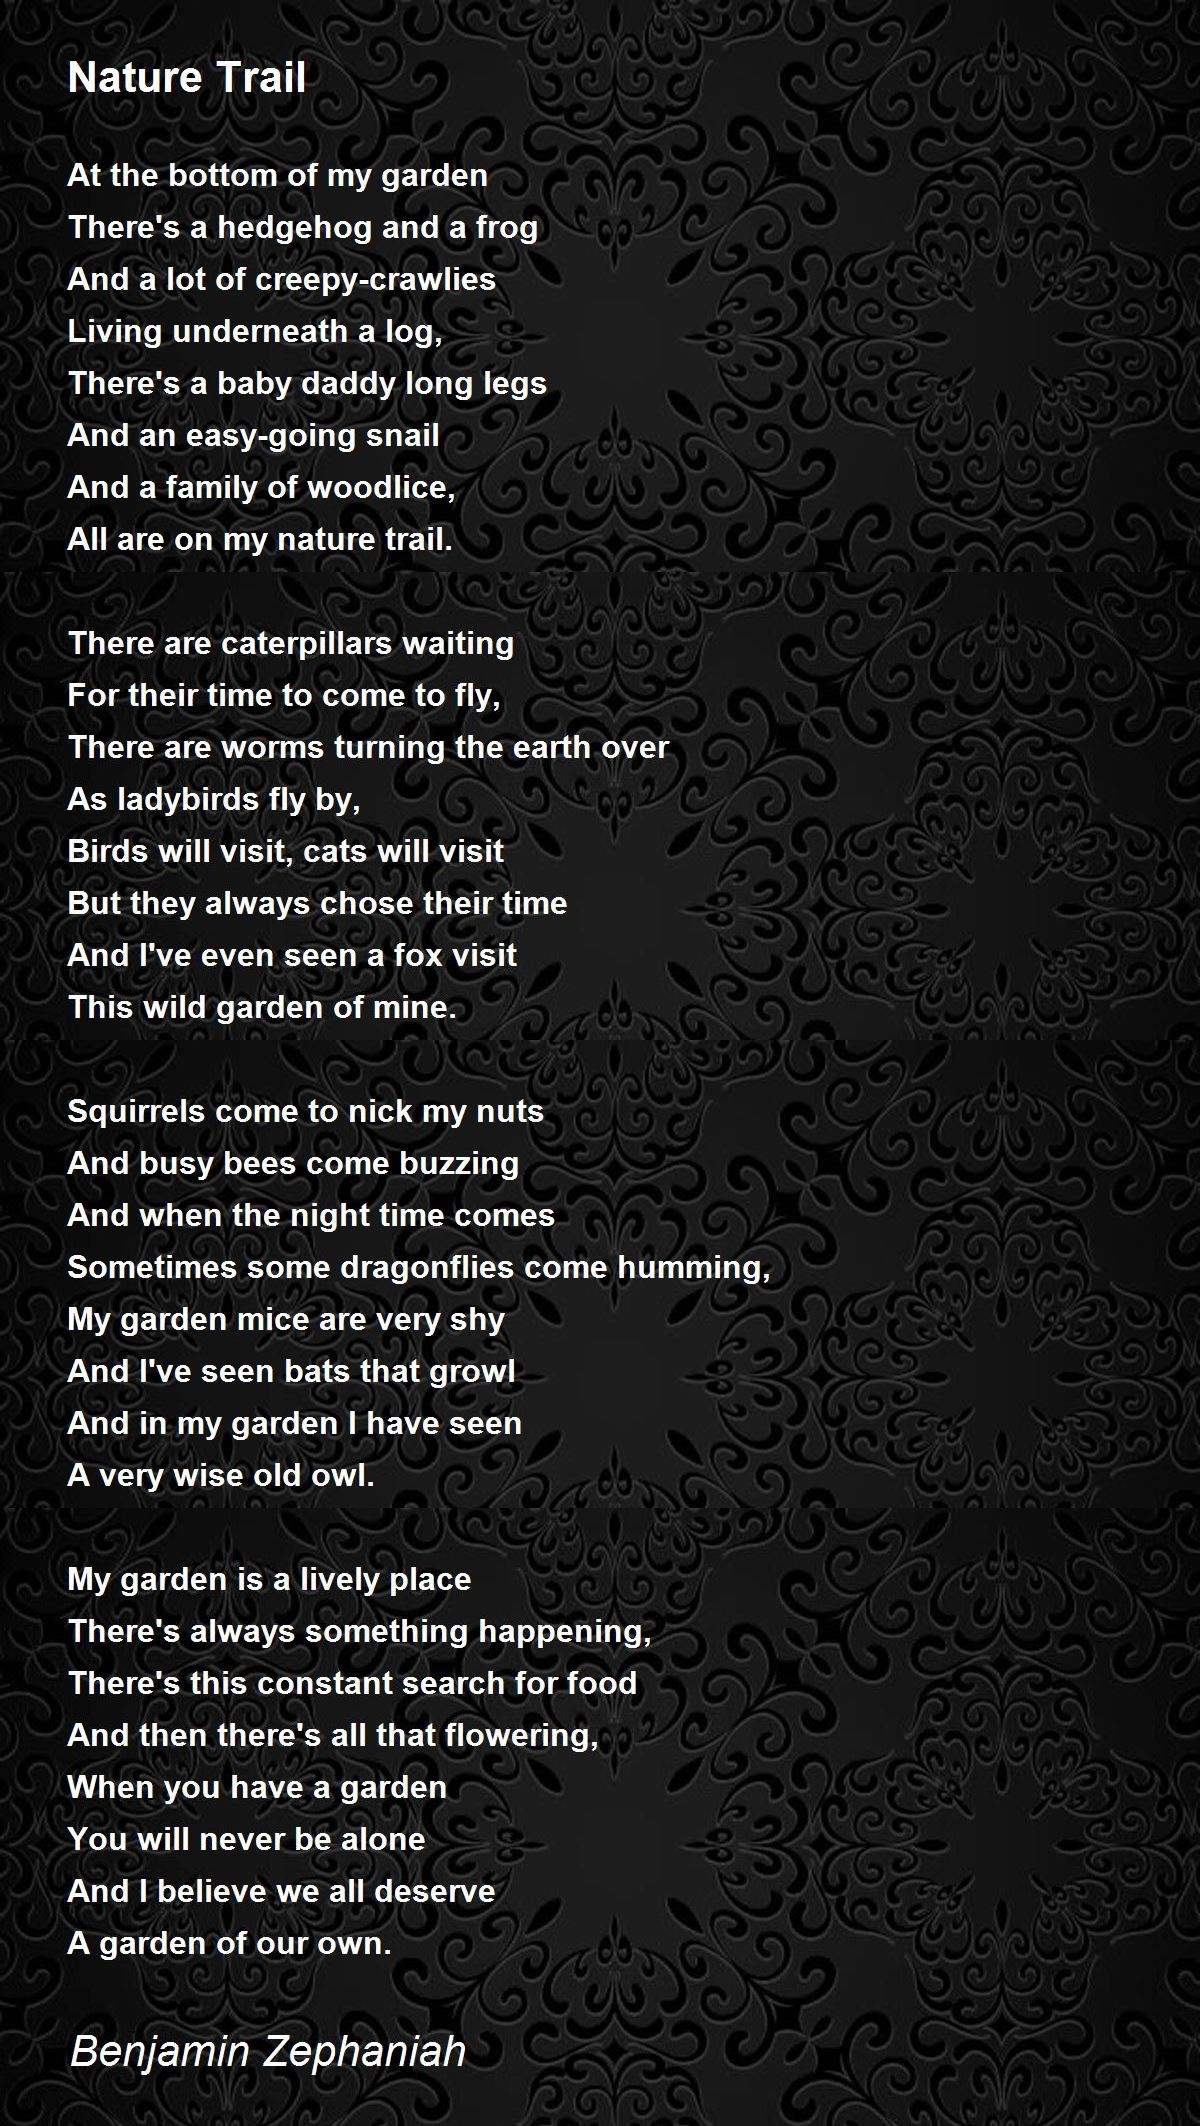 Nature Trail - Nature Trail Poem by Benjamin Zephaniah